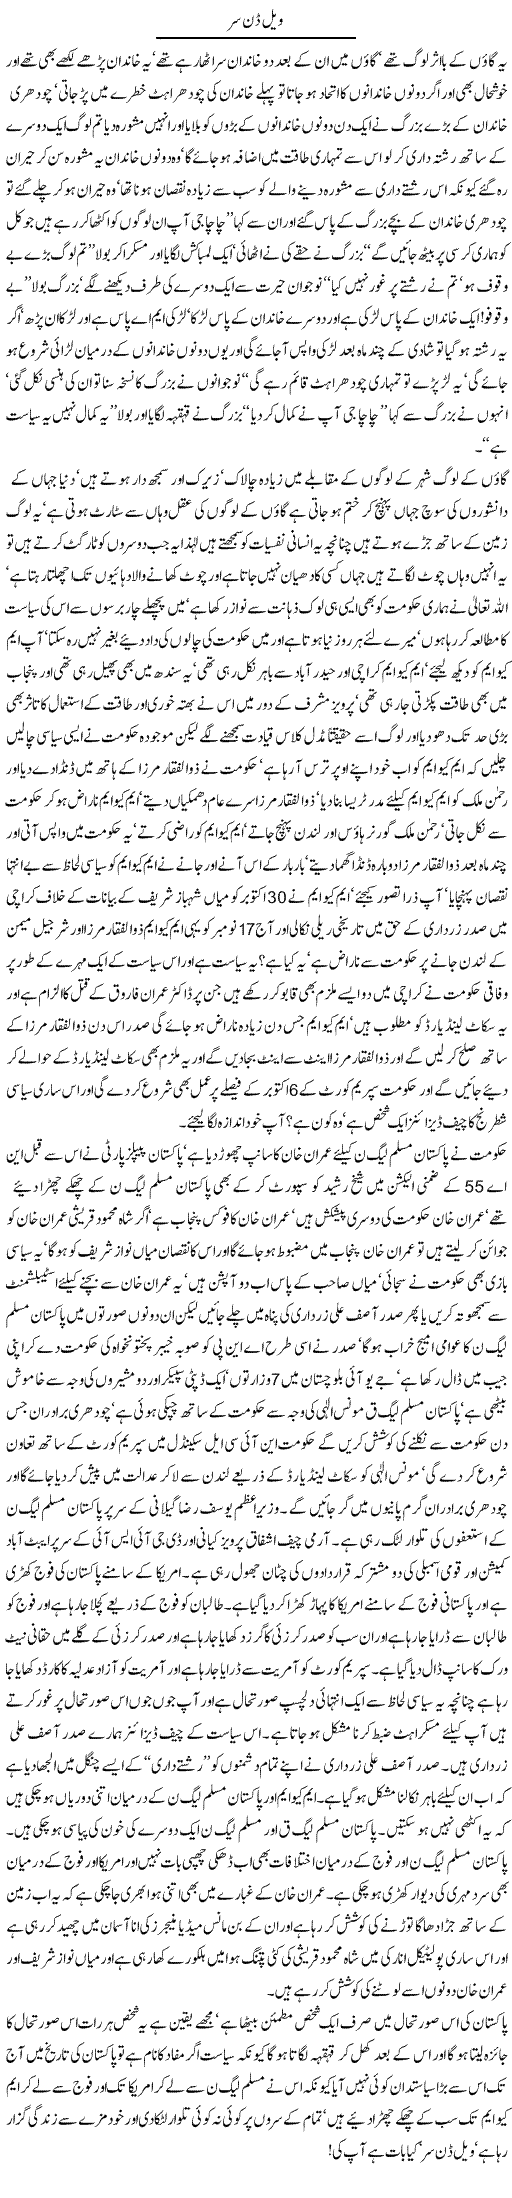 Politics of Sindh and Punjab Express Column Javed Chaudhry 18 November 2011